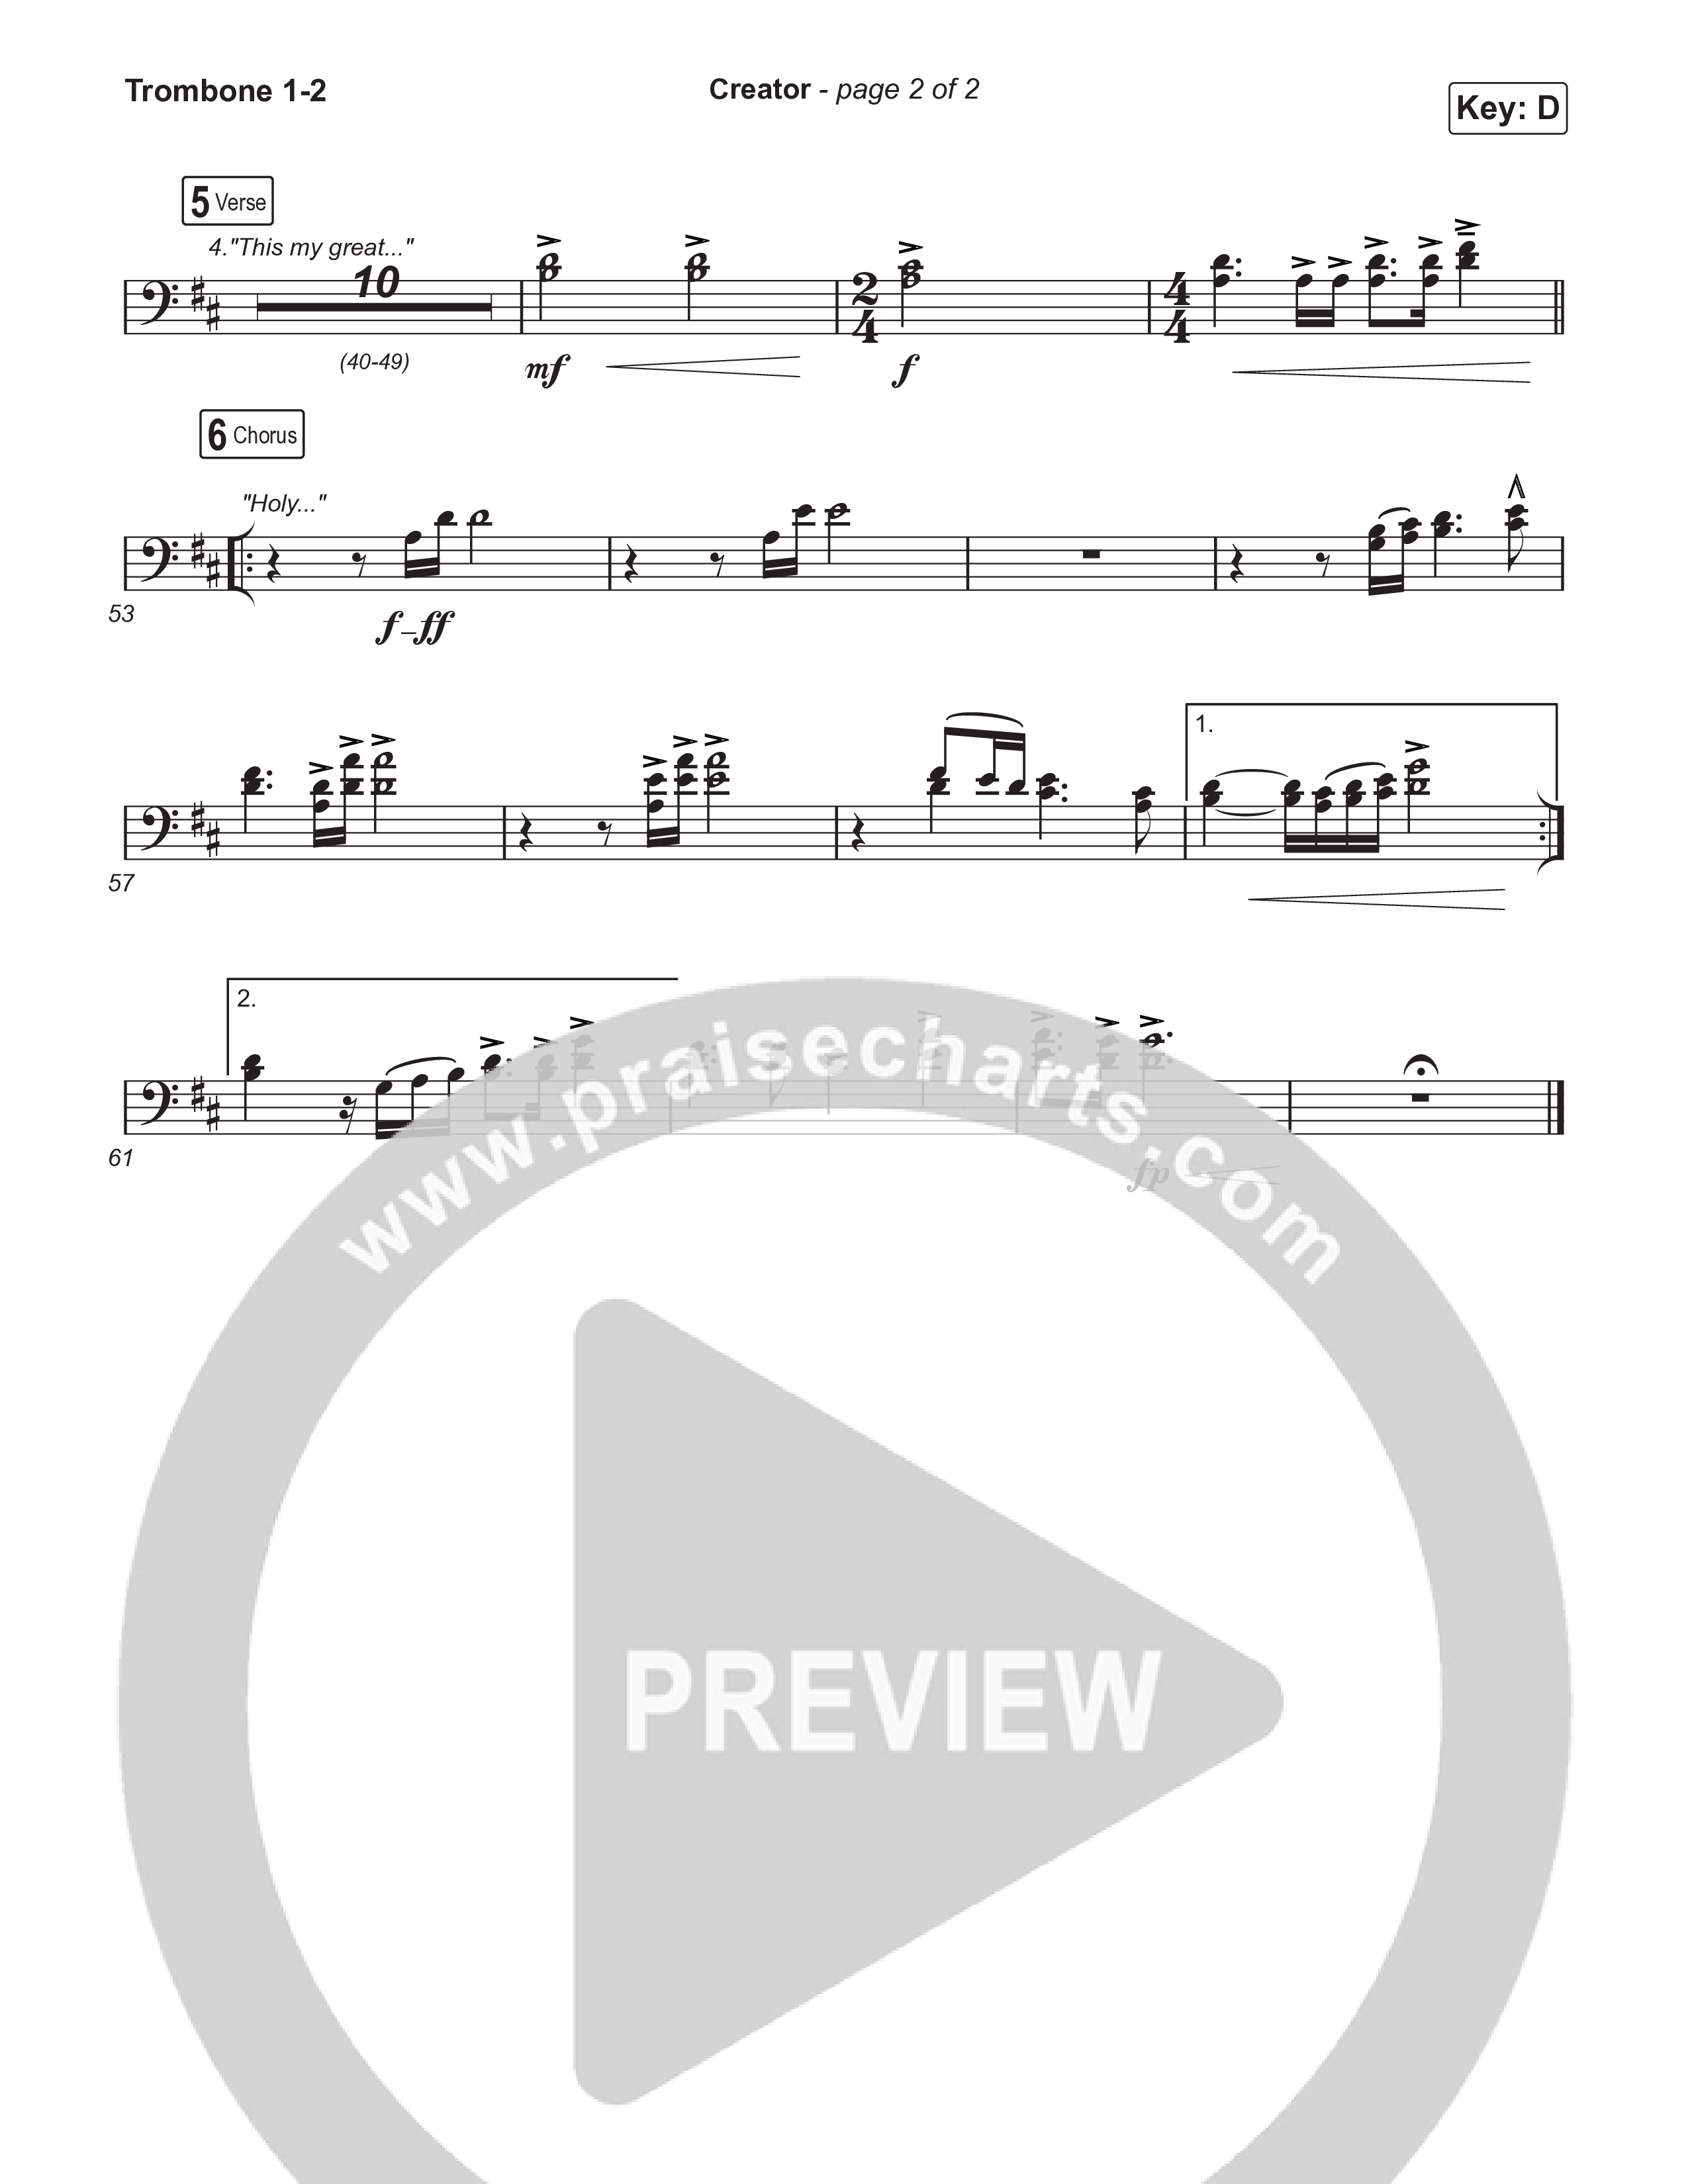 Creator (Choral Anthem SATB) Trombone 1,2 (Phil Wickham / Arr. Mason Brown)